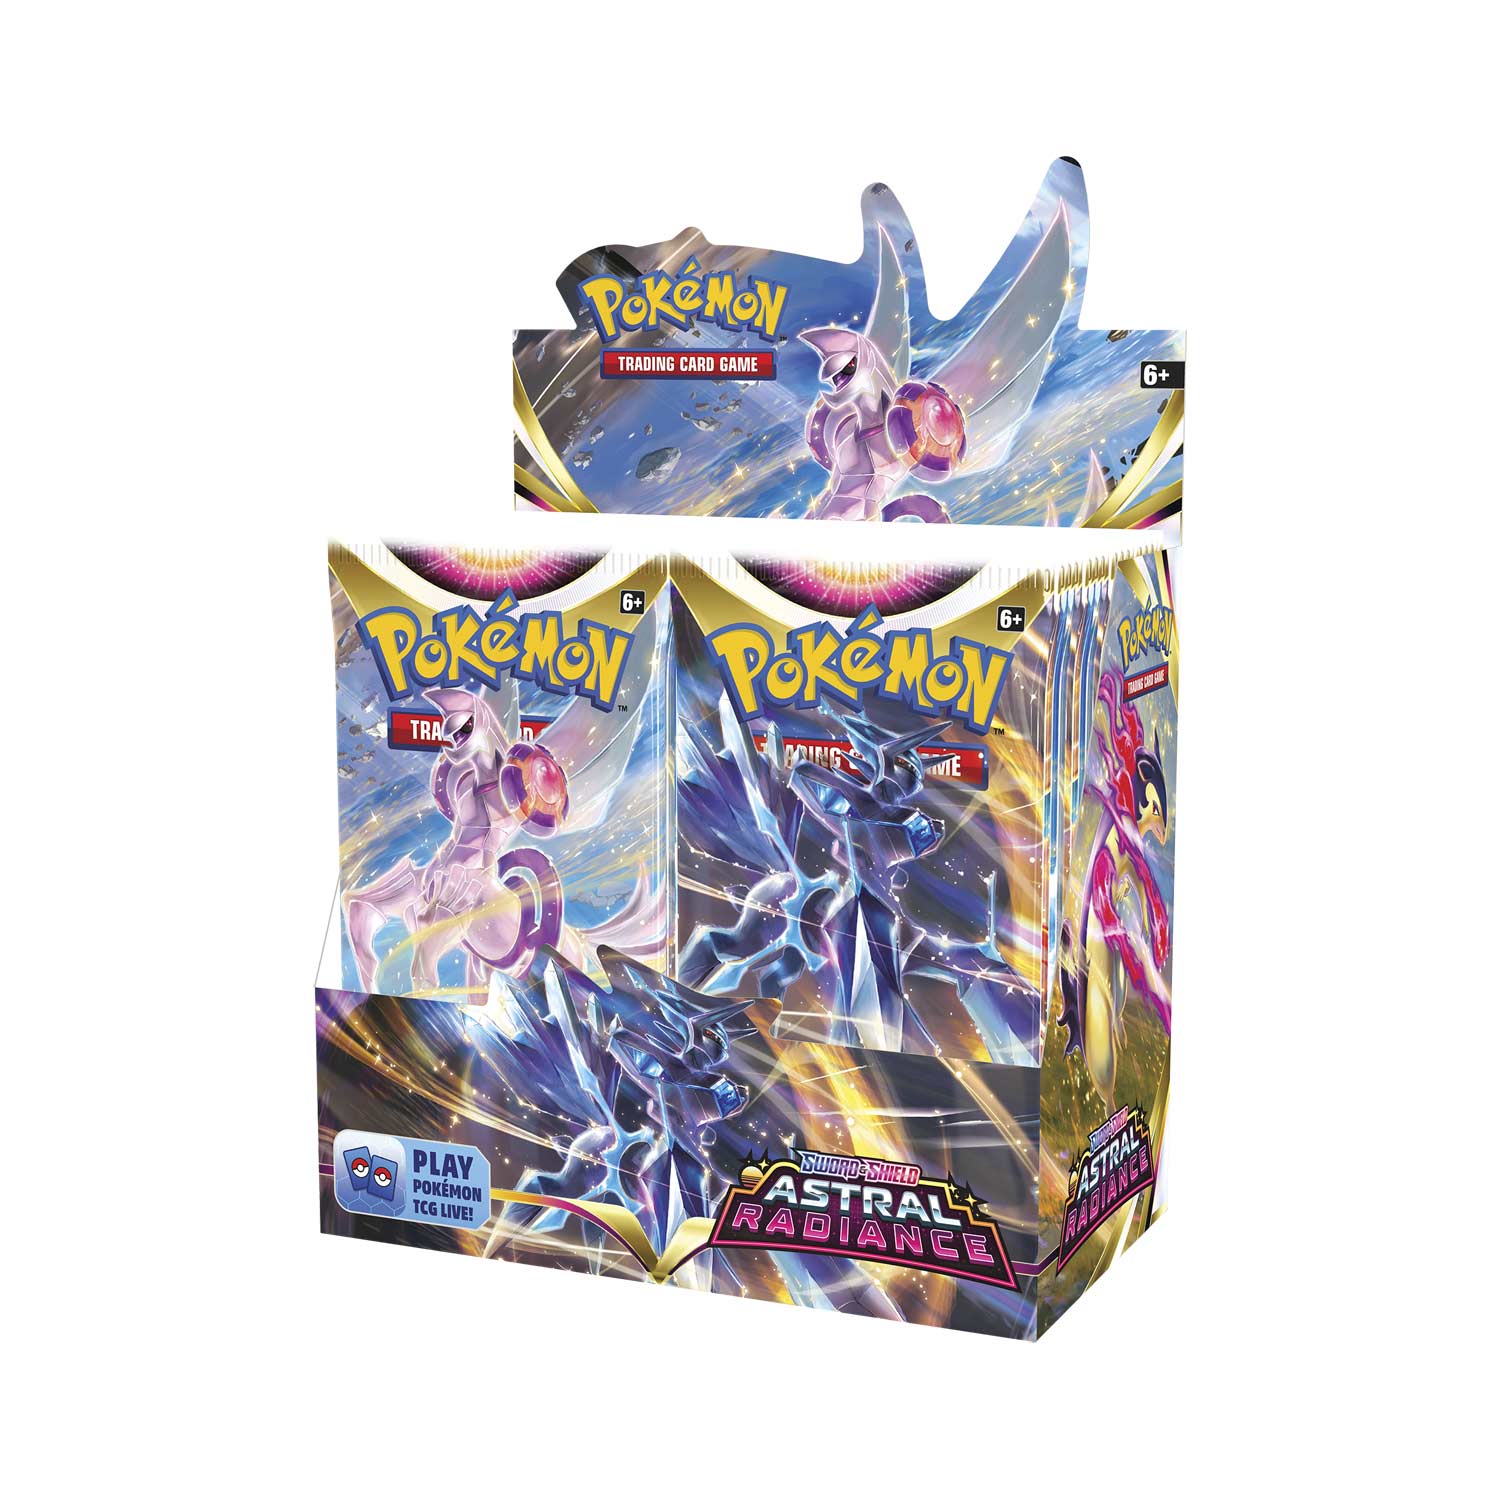 Pokémon TCG: Sword & Shield - Astral Radiance Booster Box | RetroPlay Games